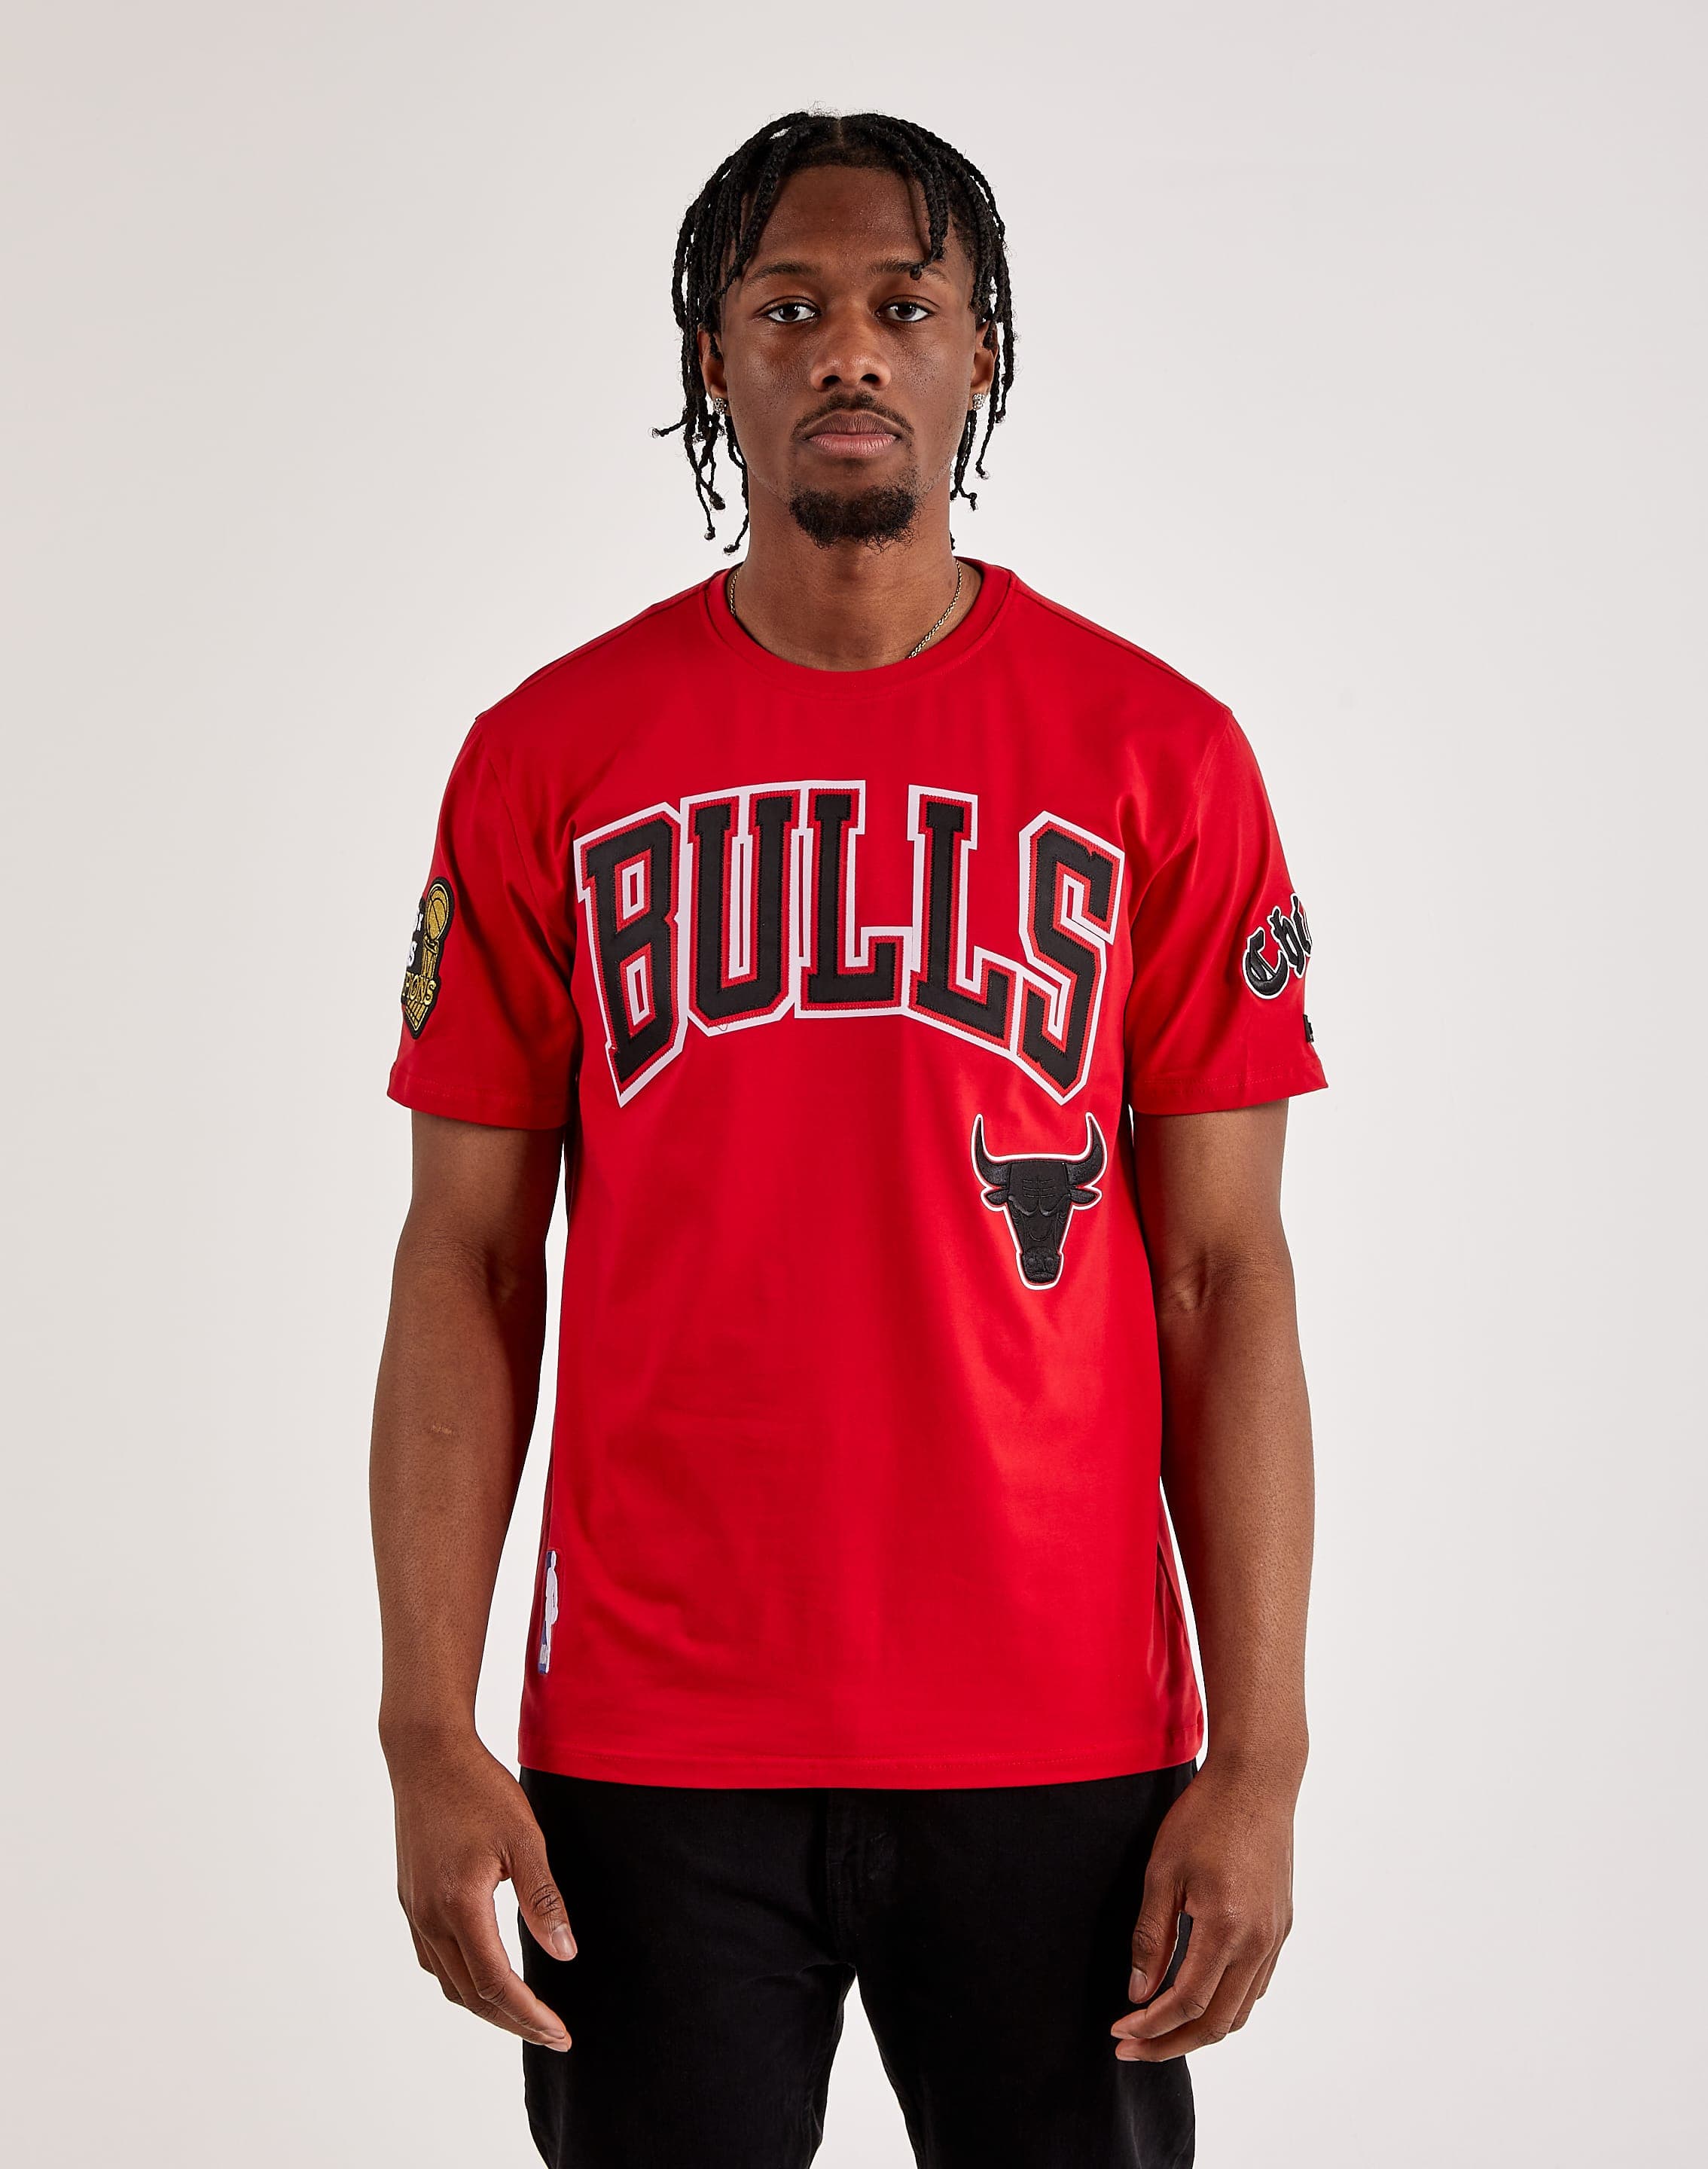 Pro Standard NBA Chicago Bulls Pro Team Black/Red Men's Shirt BCB15139-BLK - M